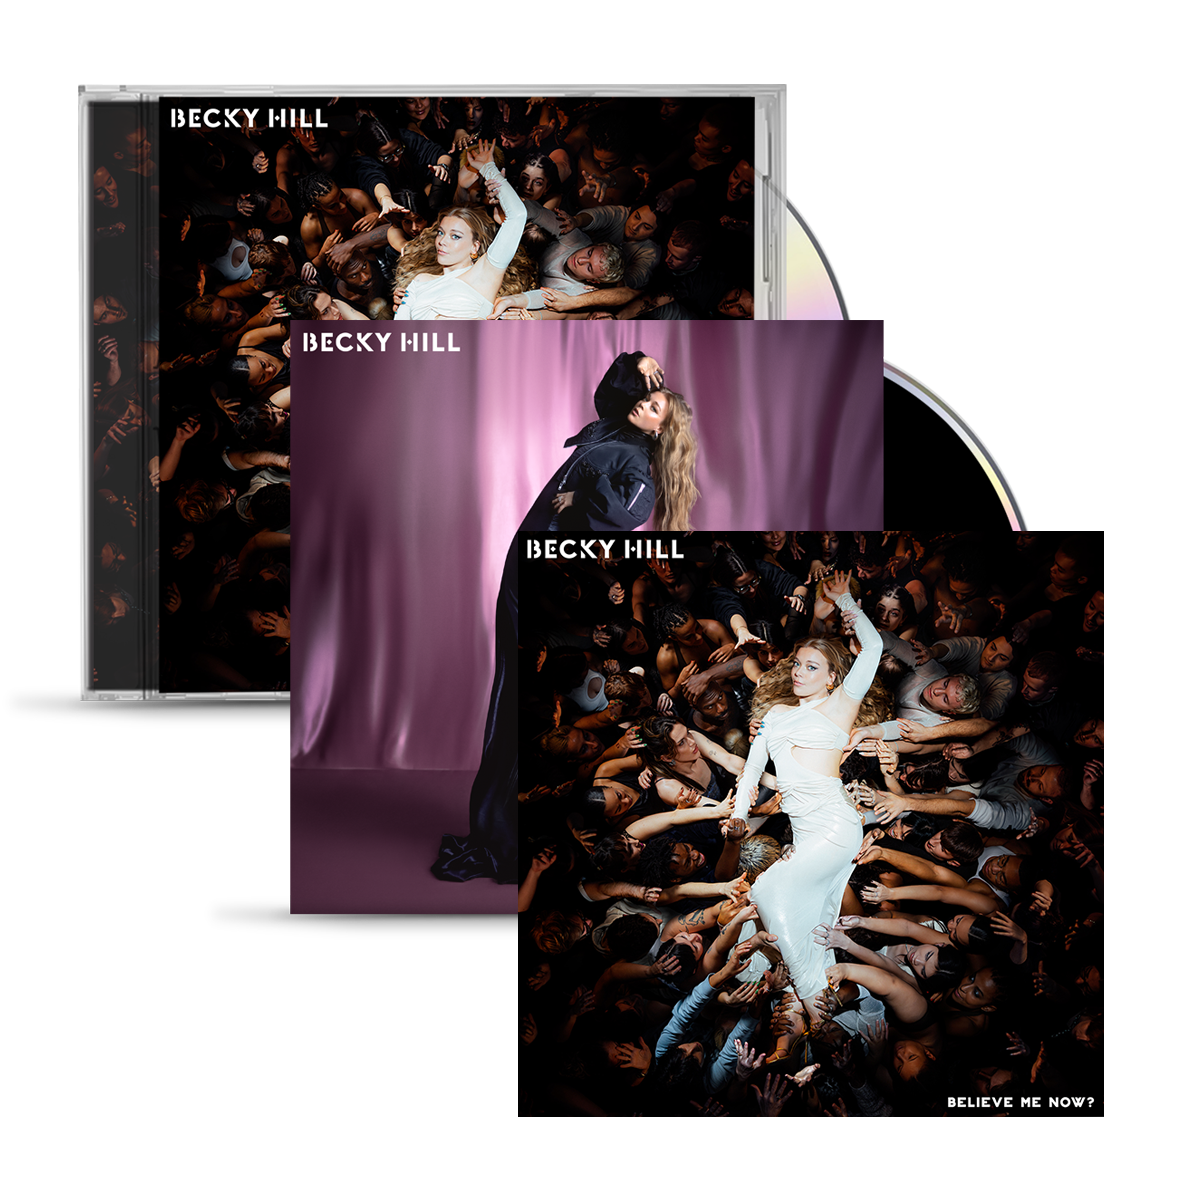 Believe Me Now? CD, Believe Me Now? CD Sleeve #1 + Signed Art Card